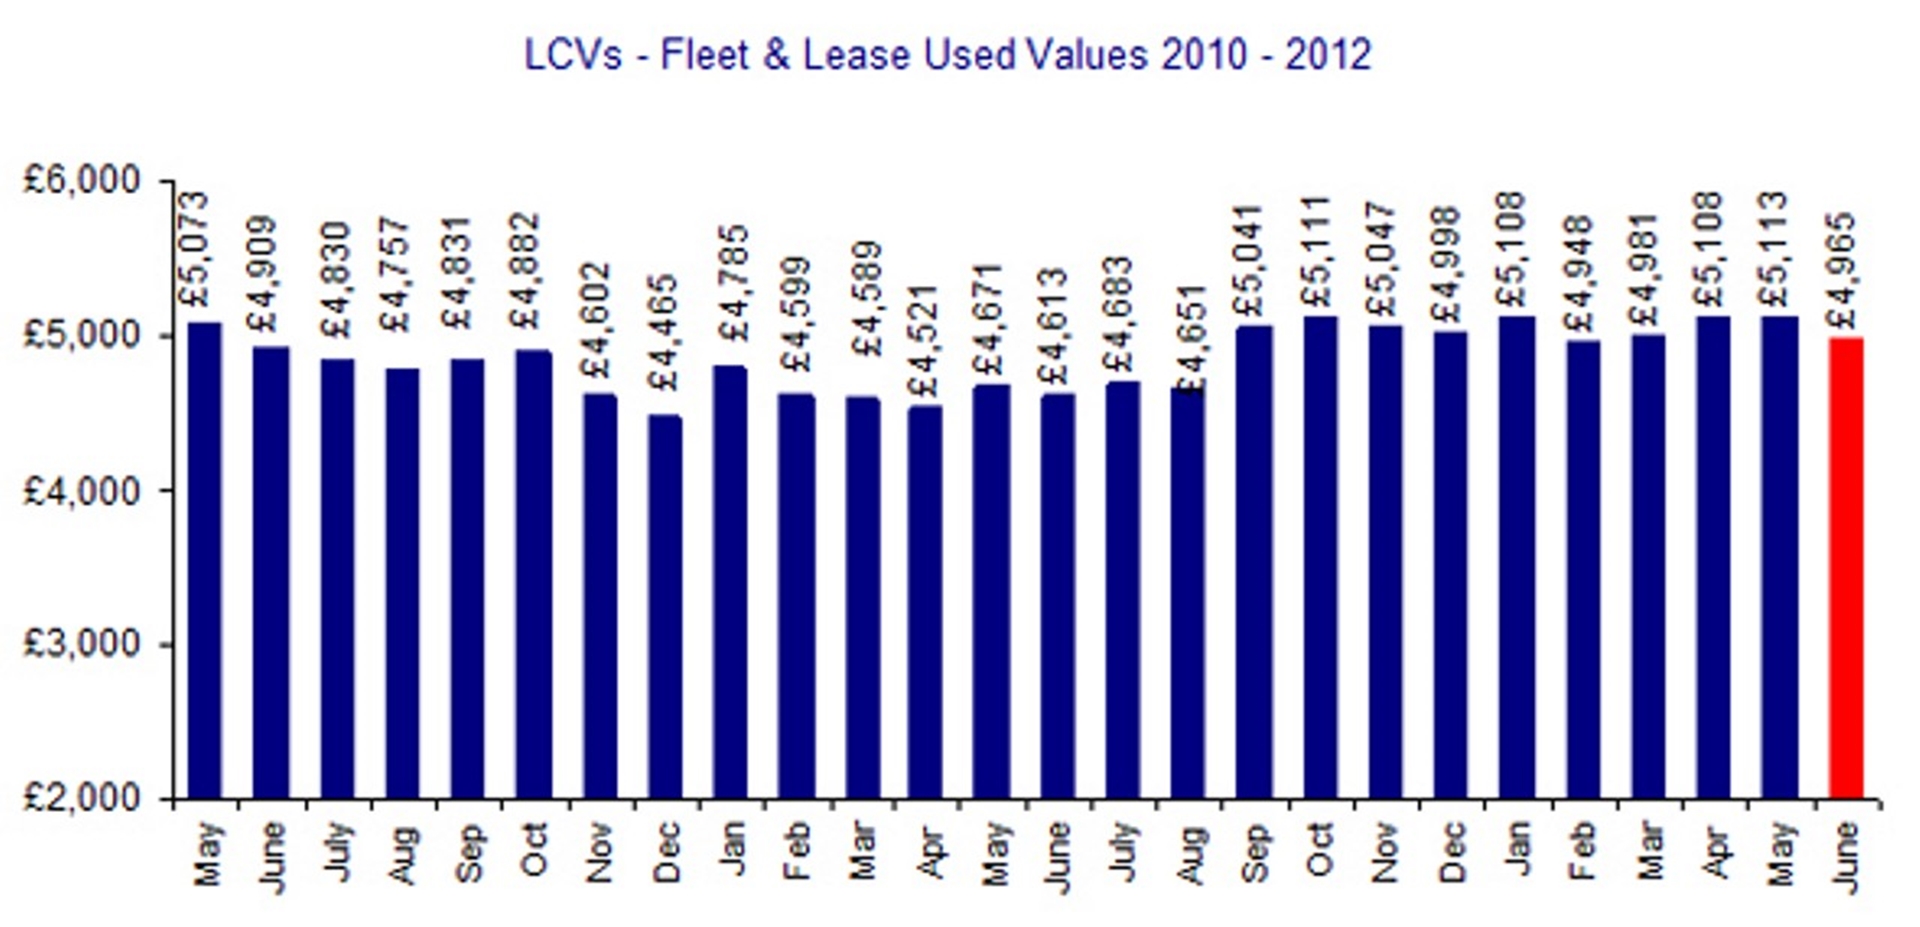 BCA Fleet LCV Average used Values